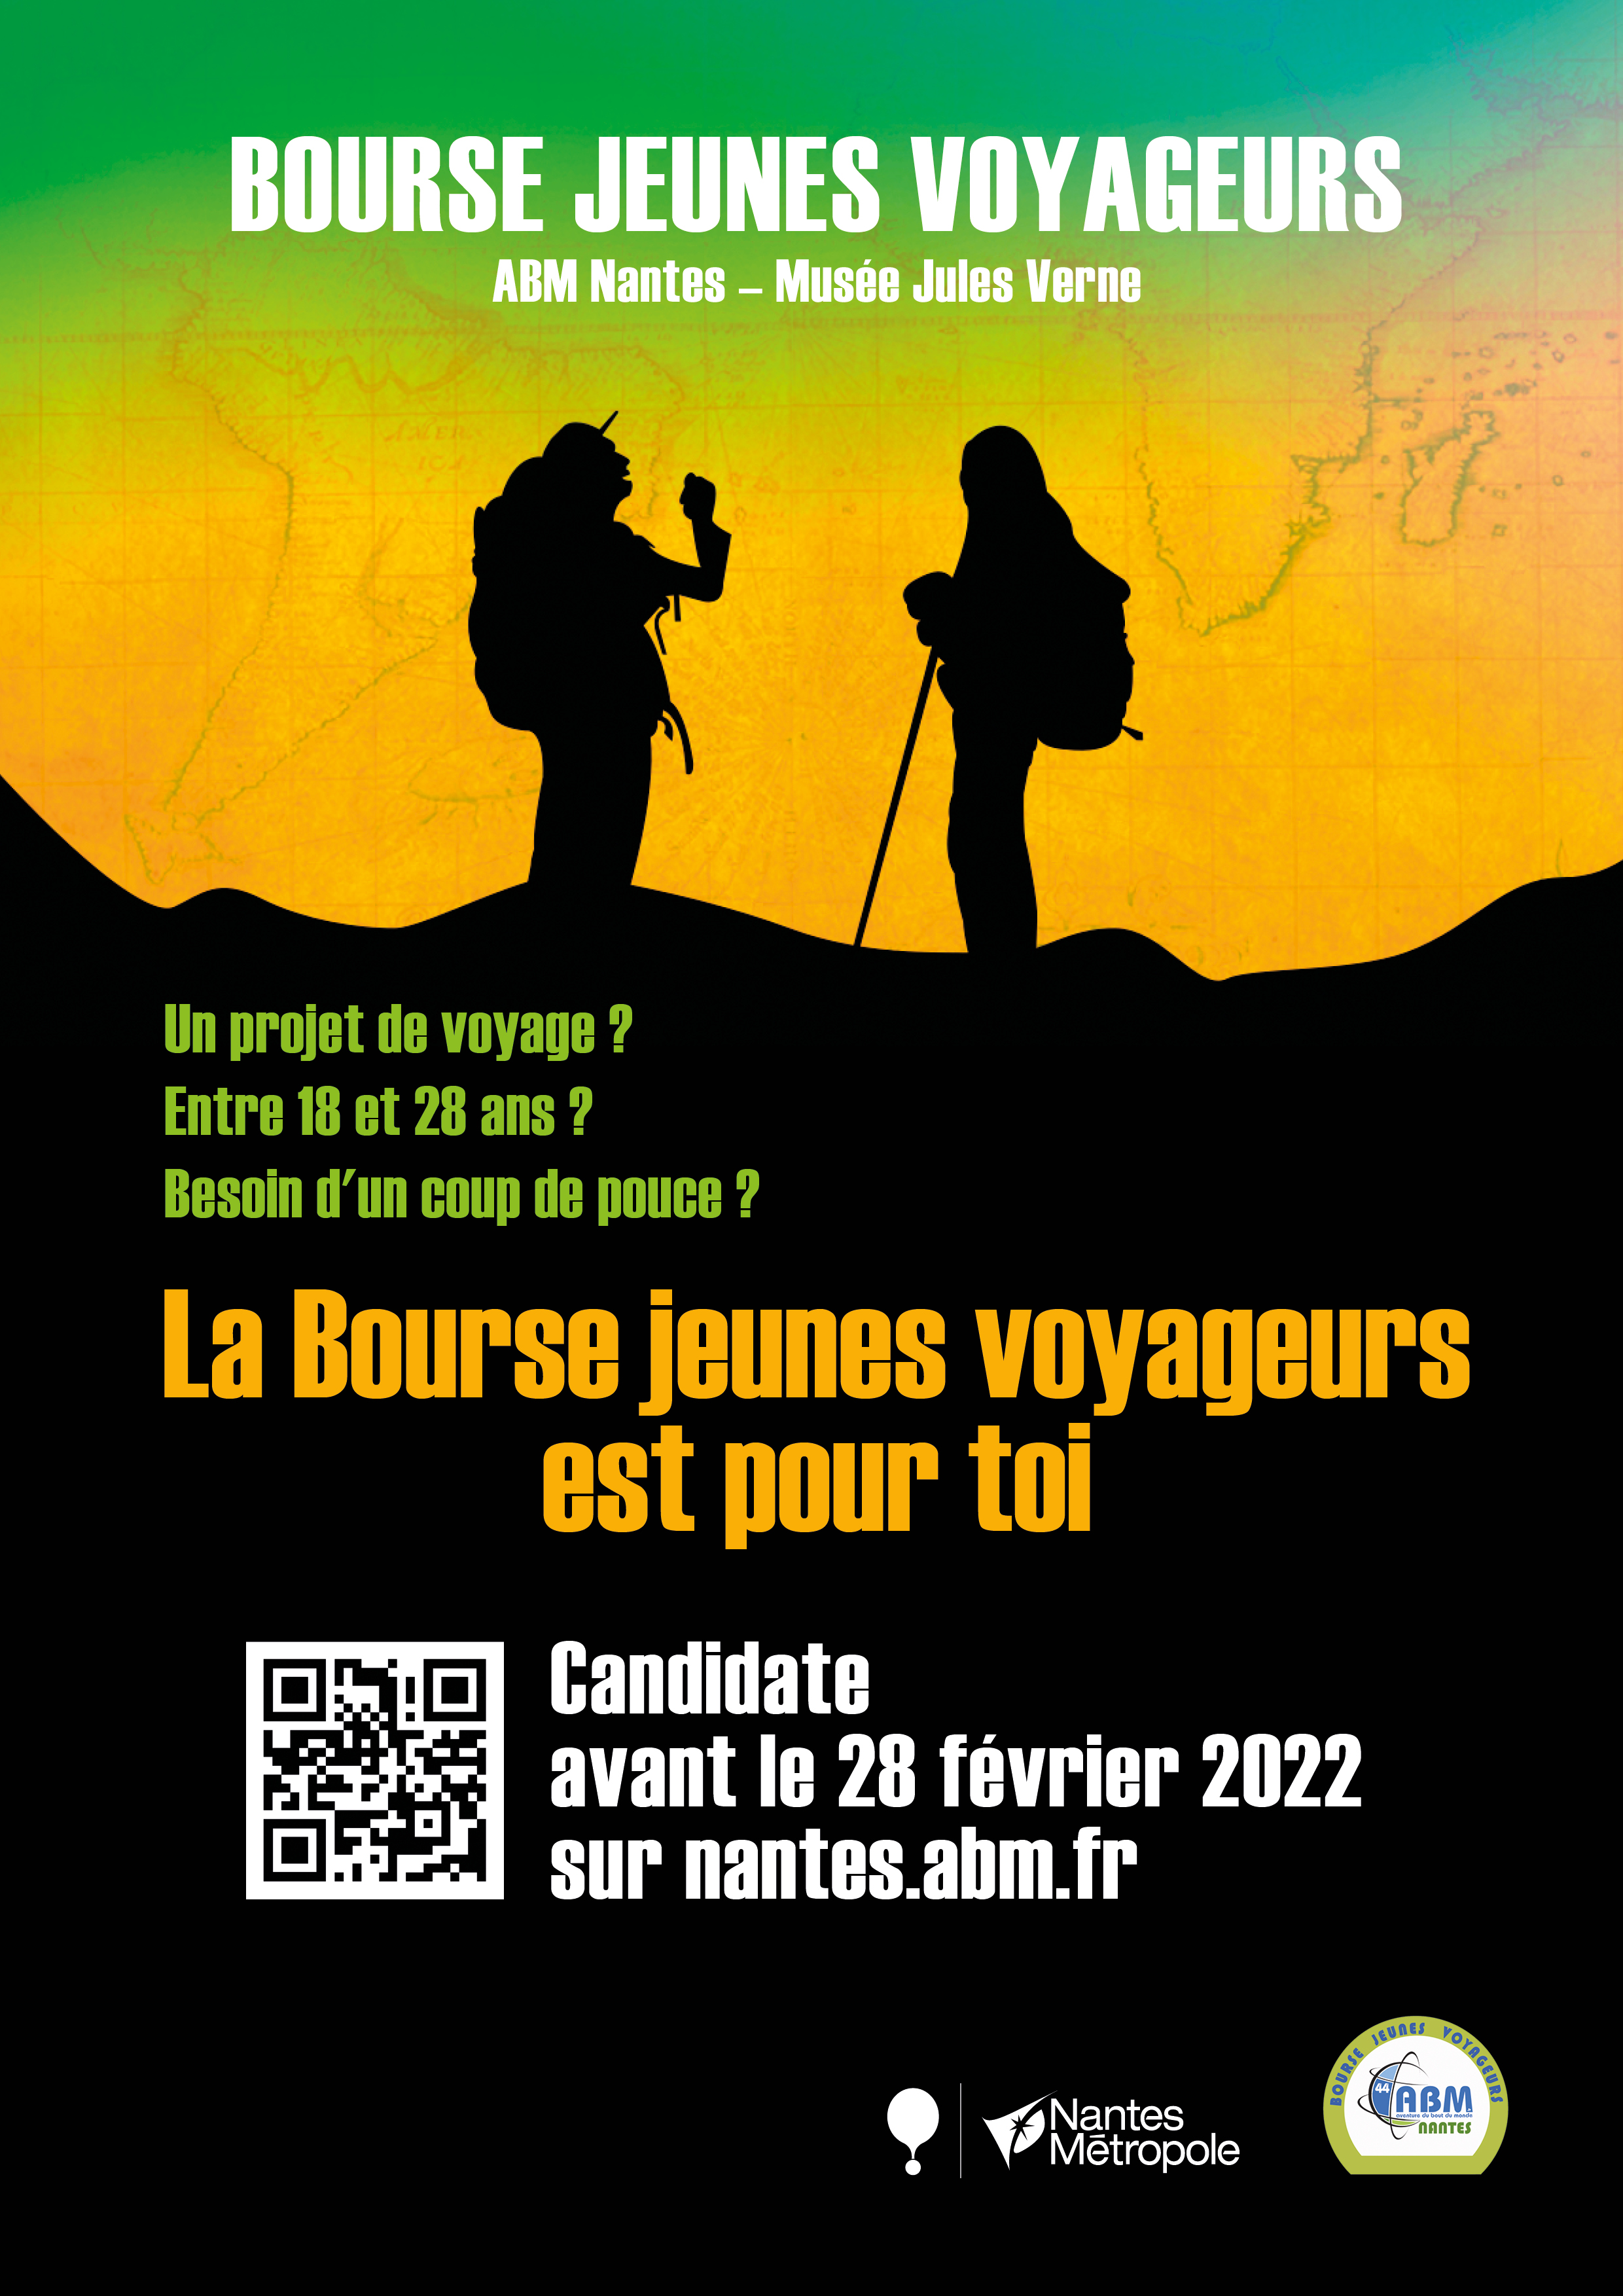 MJV_Bourse_jeunes_voyageurs_A4-11-21.jpg